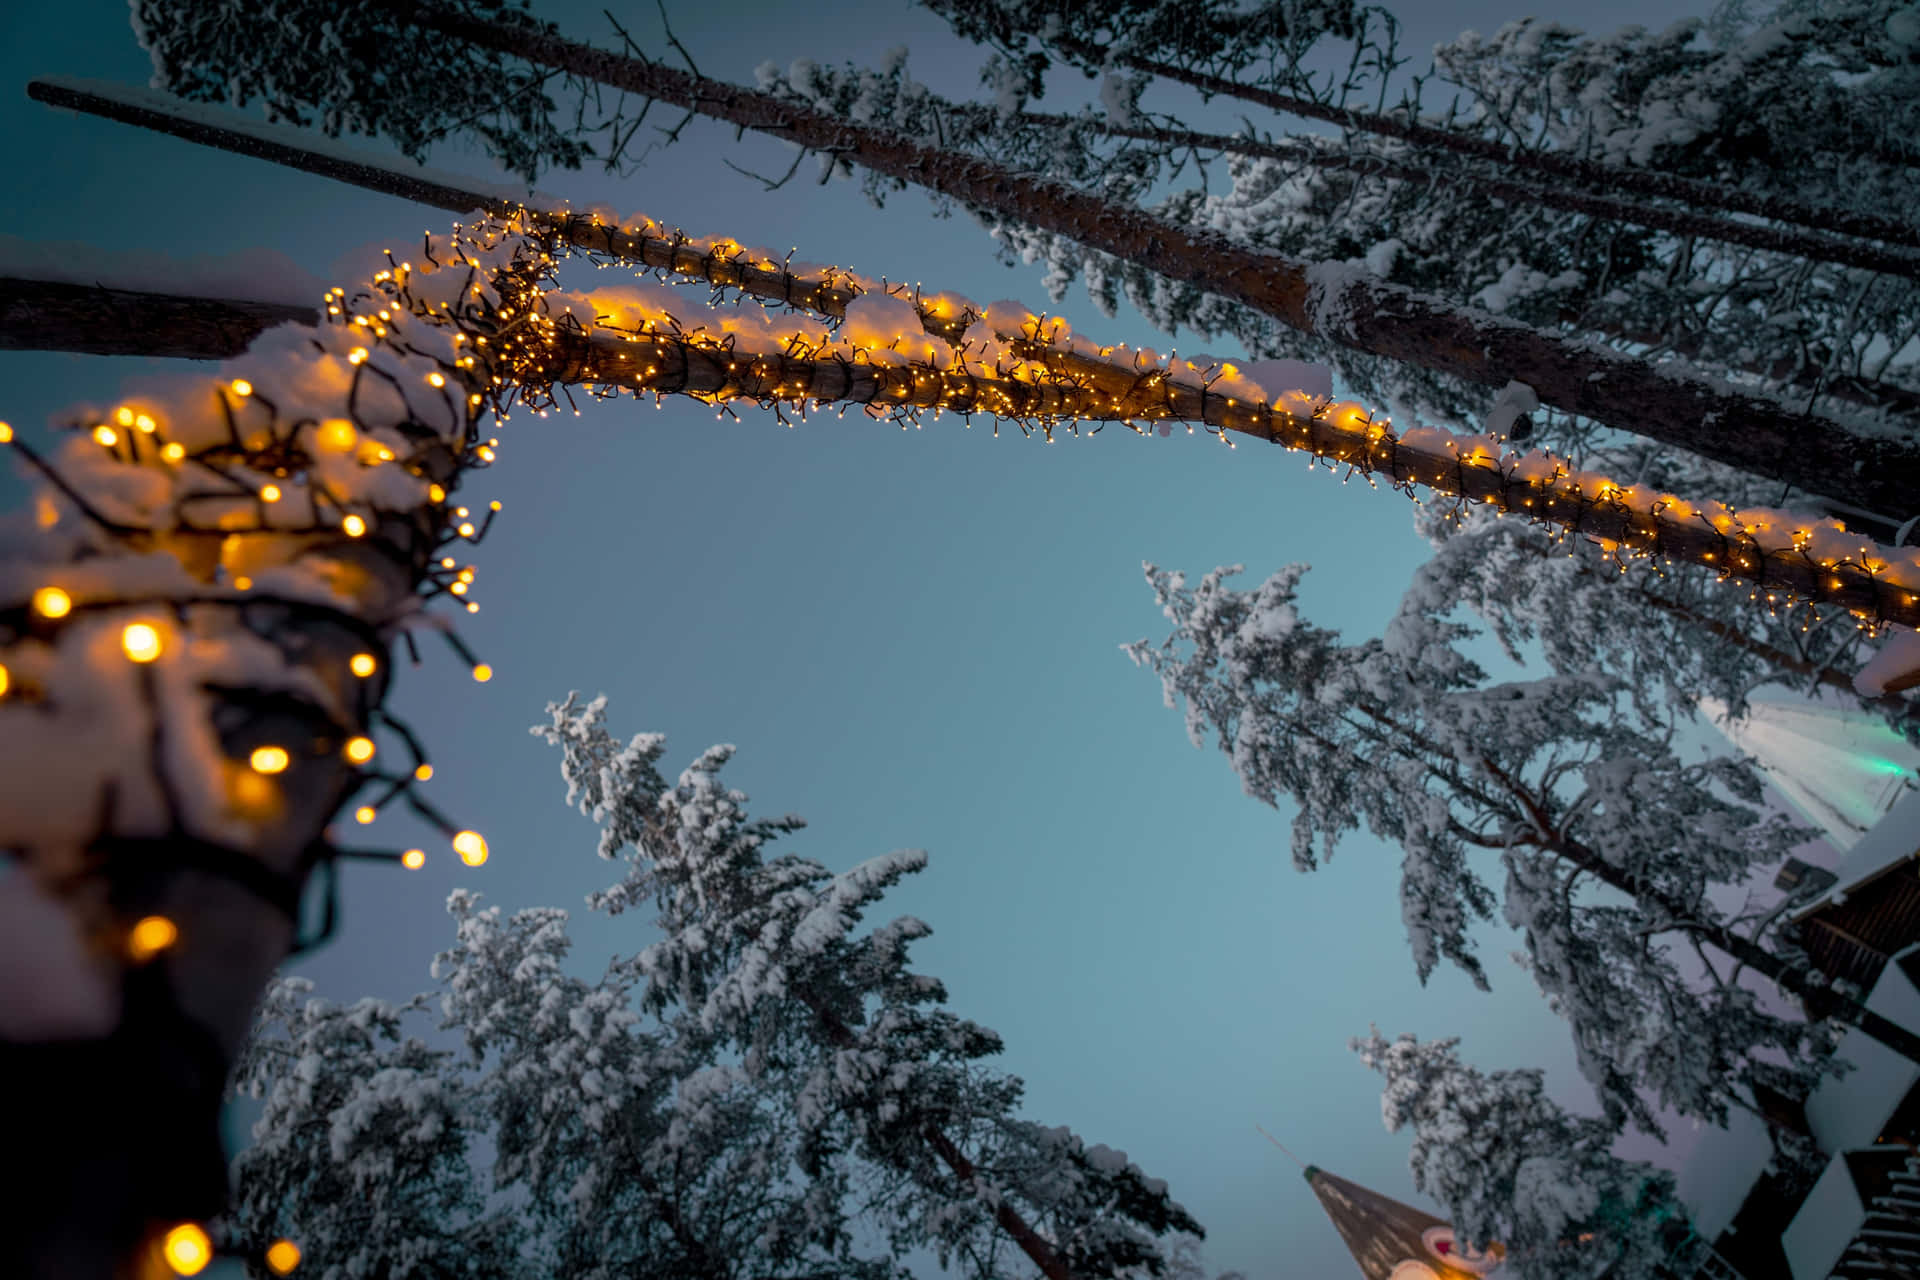 Illuminate the Festive Season with Sparkling Christmas Lights